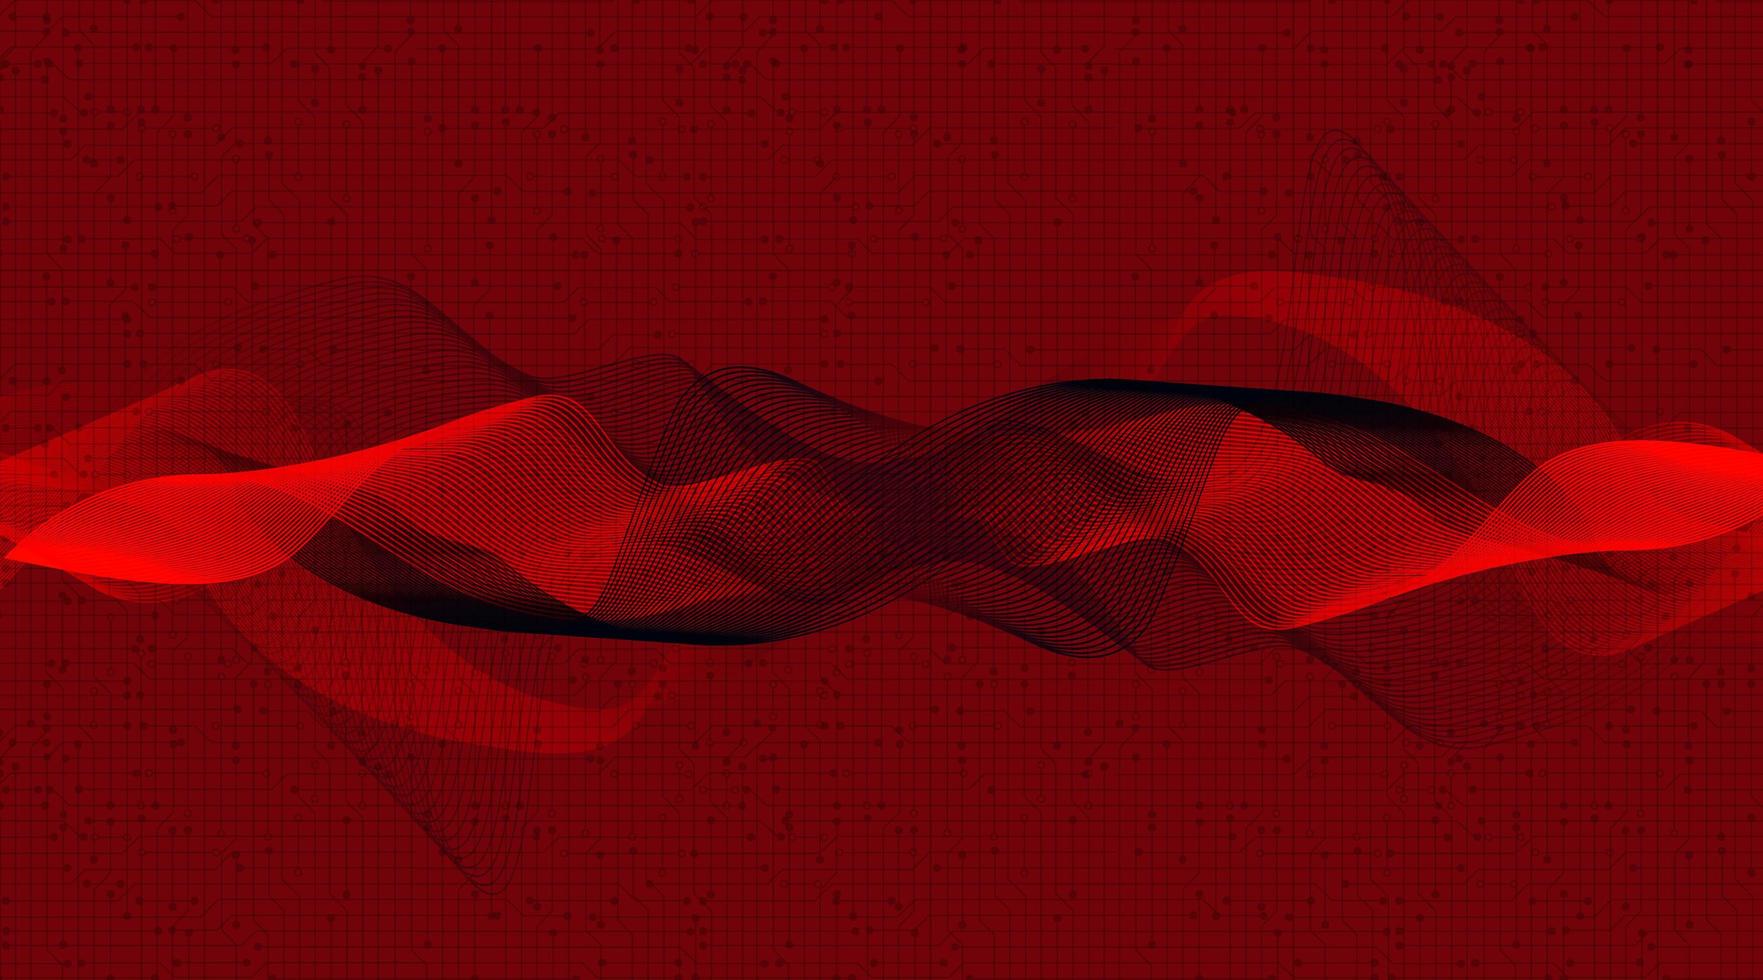 Red Digital Sound Wave Background vector